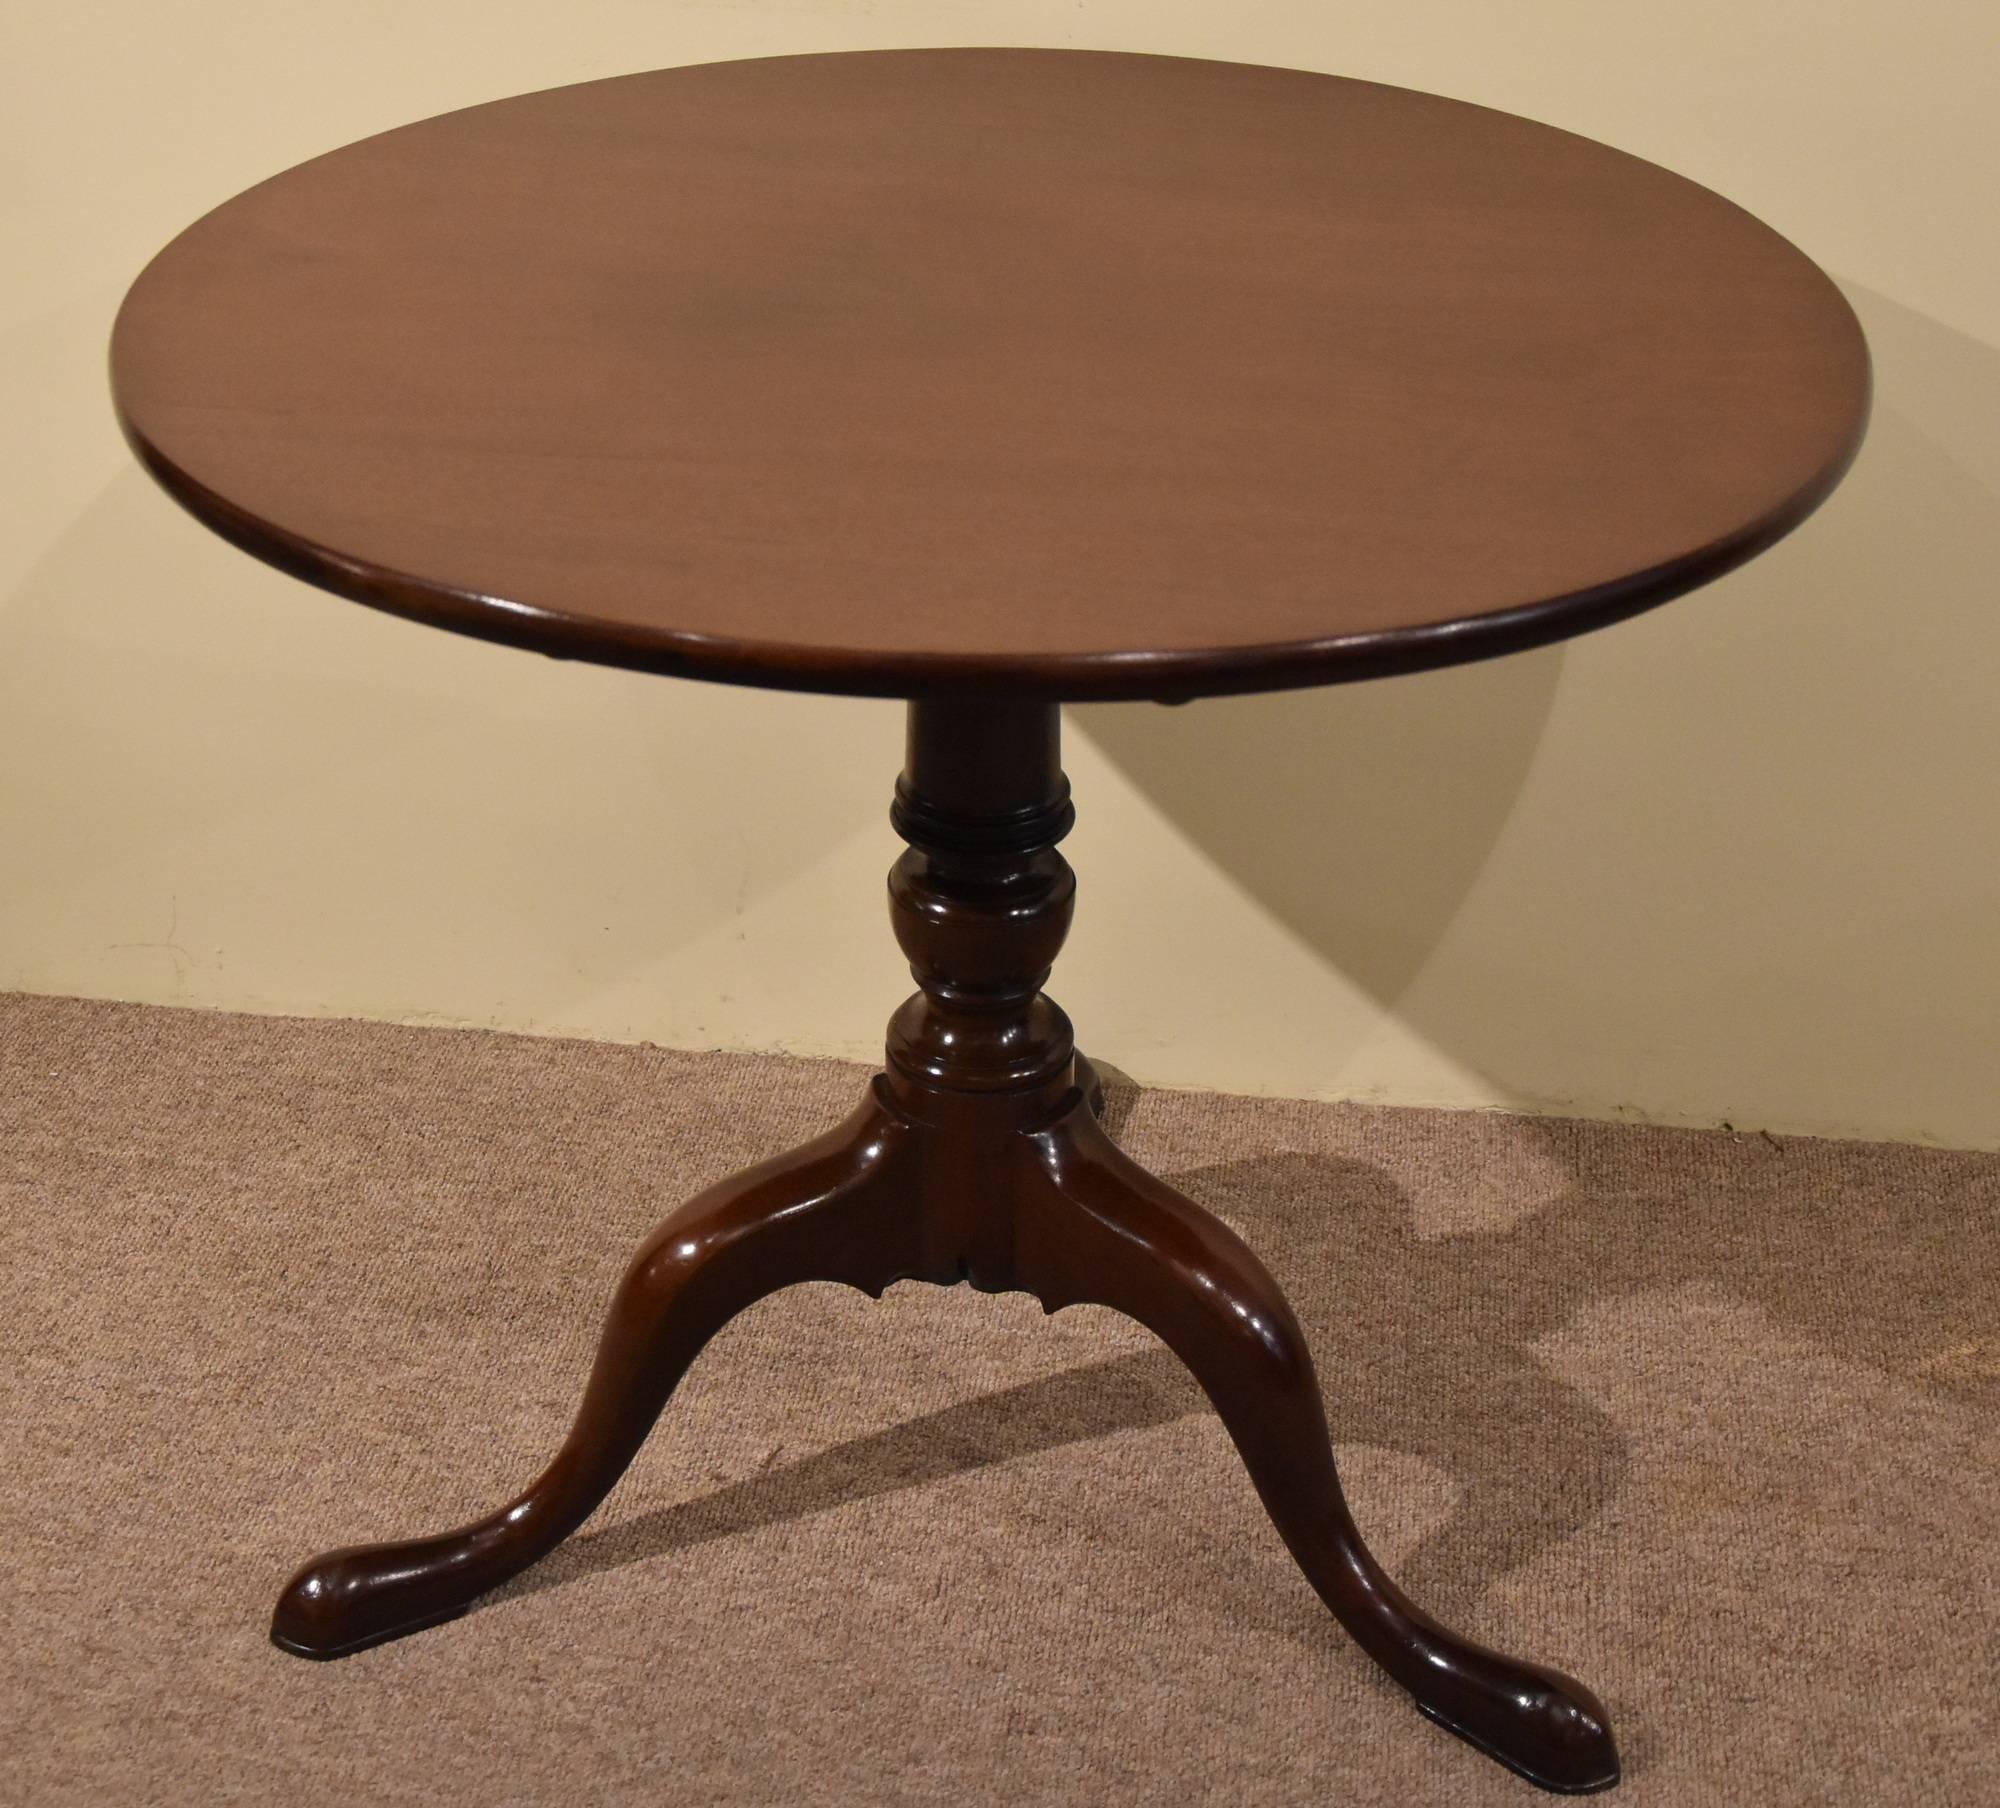 George III mahogany tripod table, circa 1790.

Dimensions:
Height 28.5